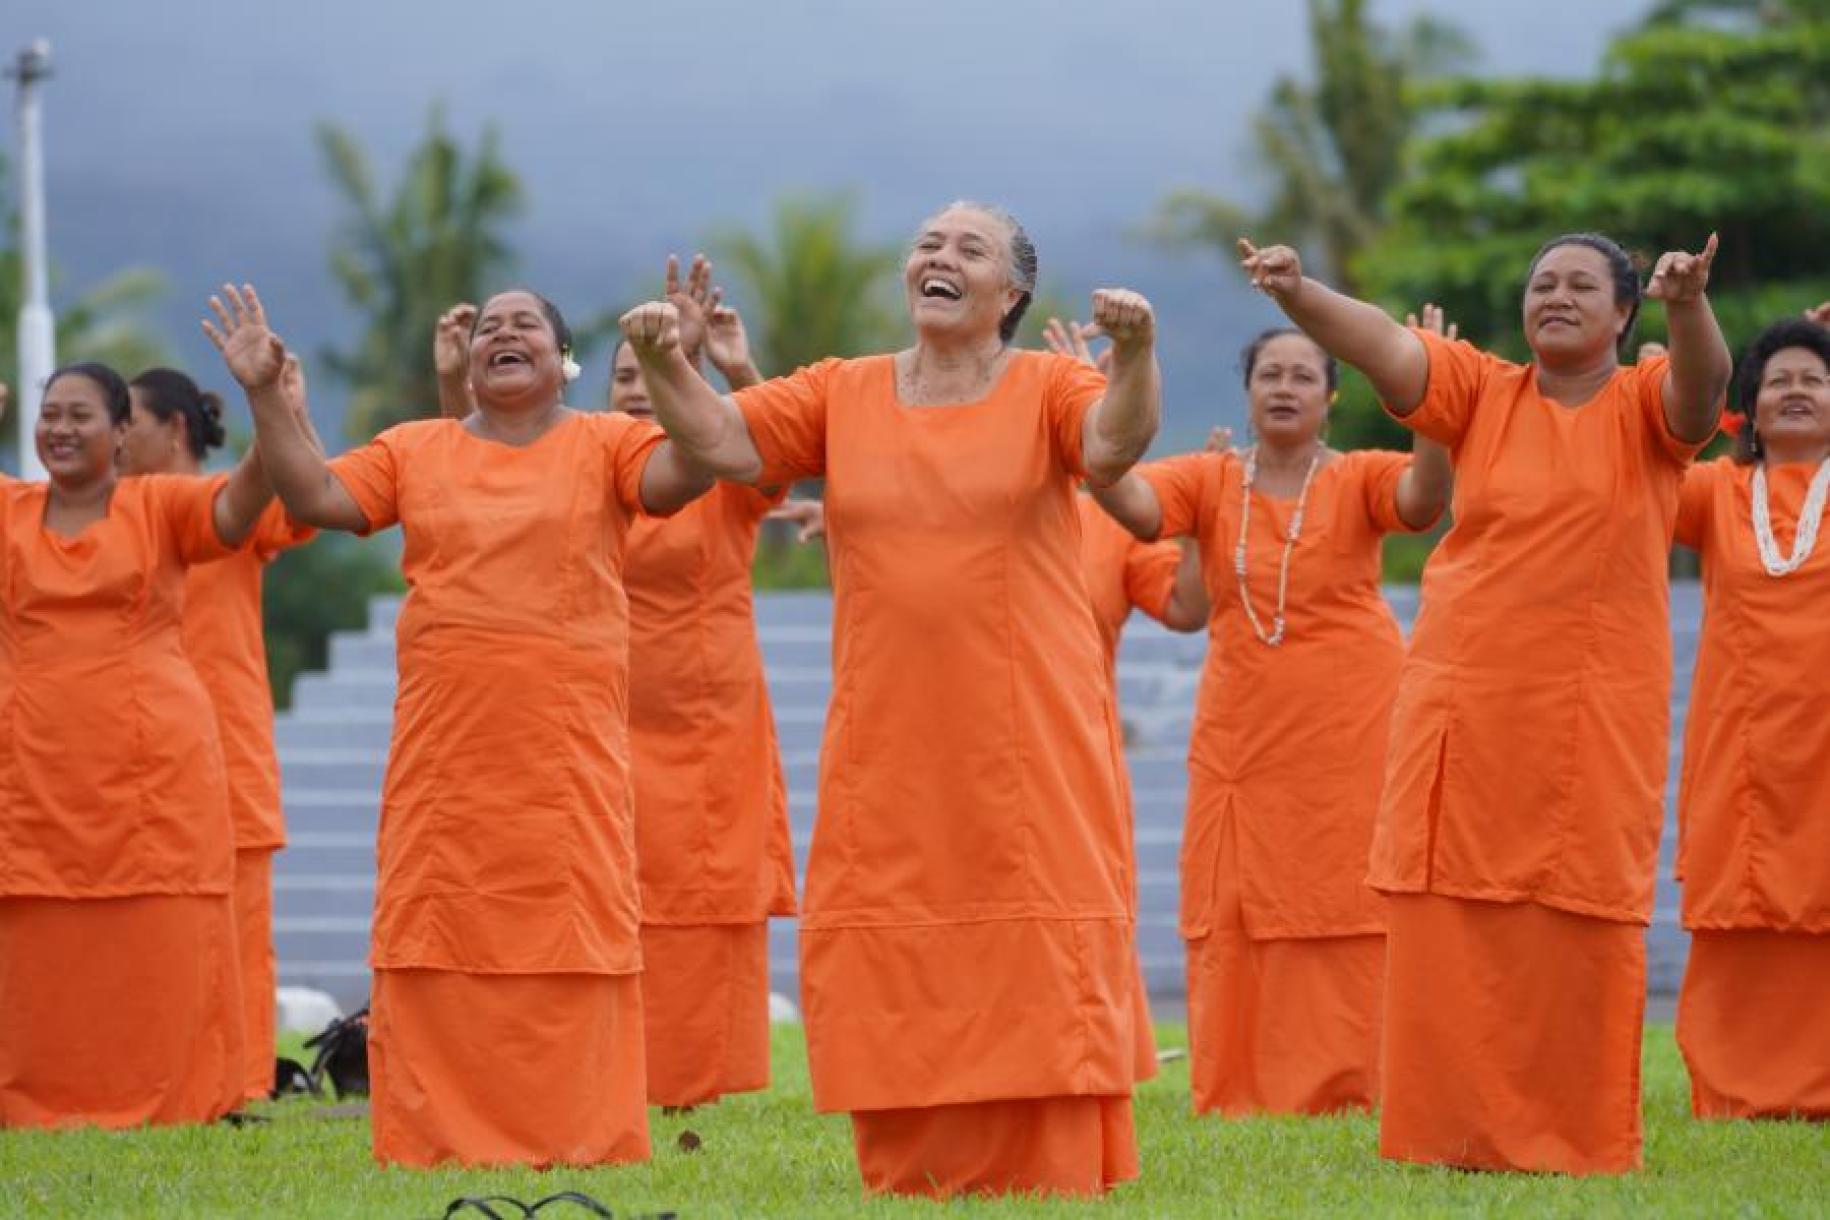 Women all dressed in orange perform at a gender-based violence event outside.